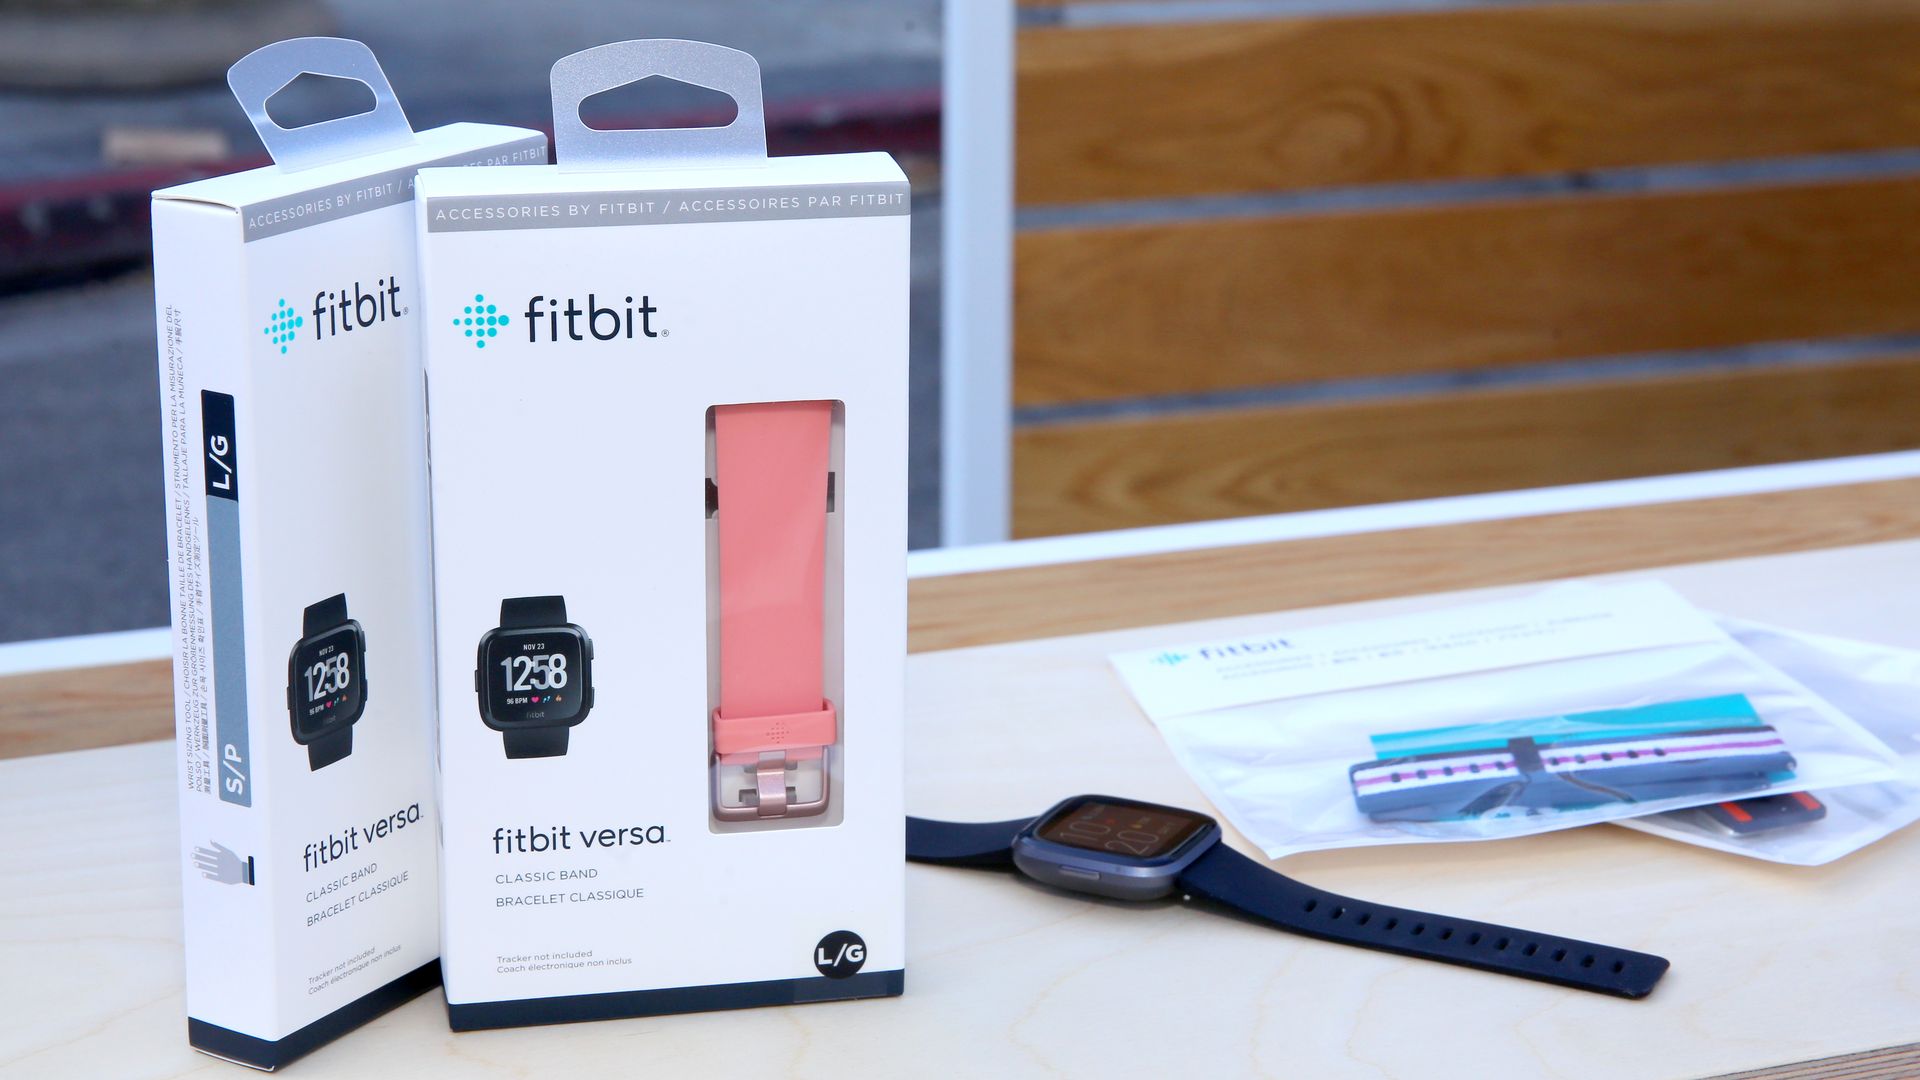 The Fitbit versa